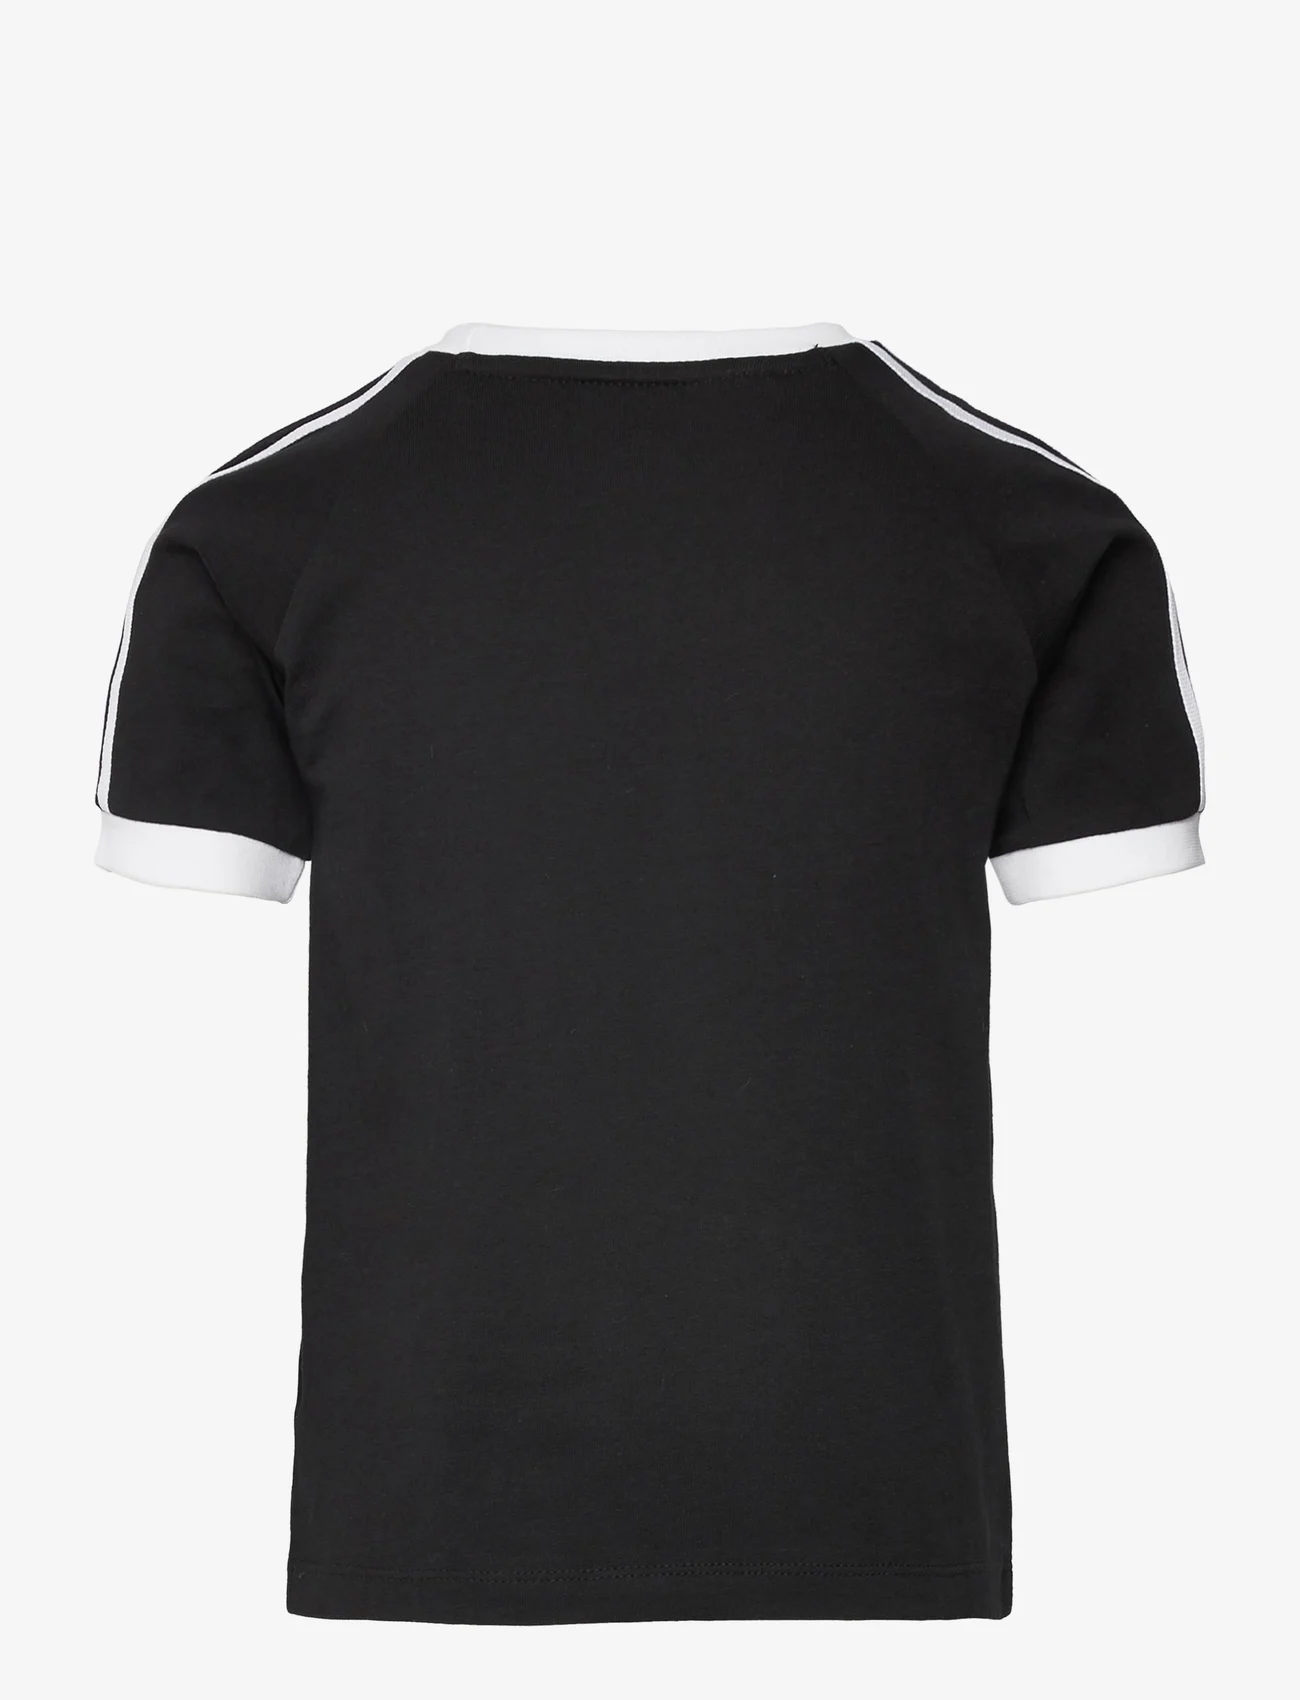 adidas Originals - 3STRIPES TEE - kortærmede t-shirts - black/white - 1